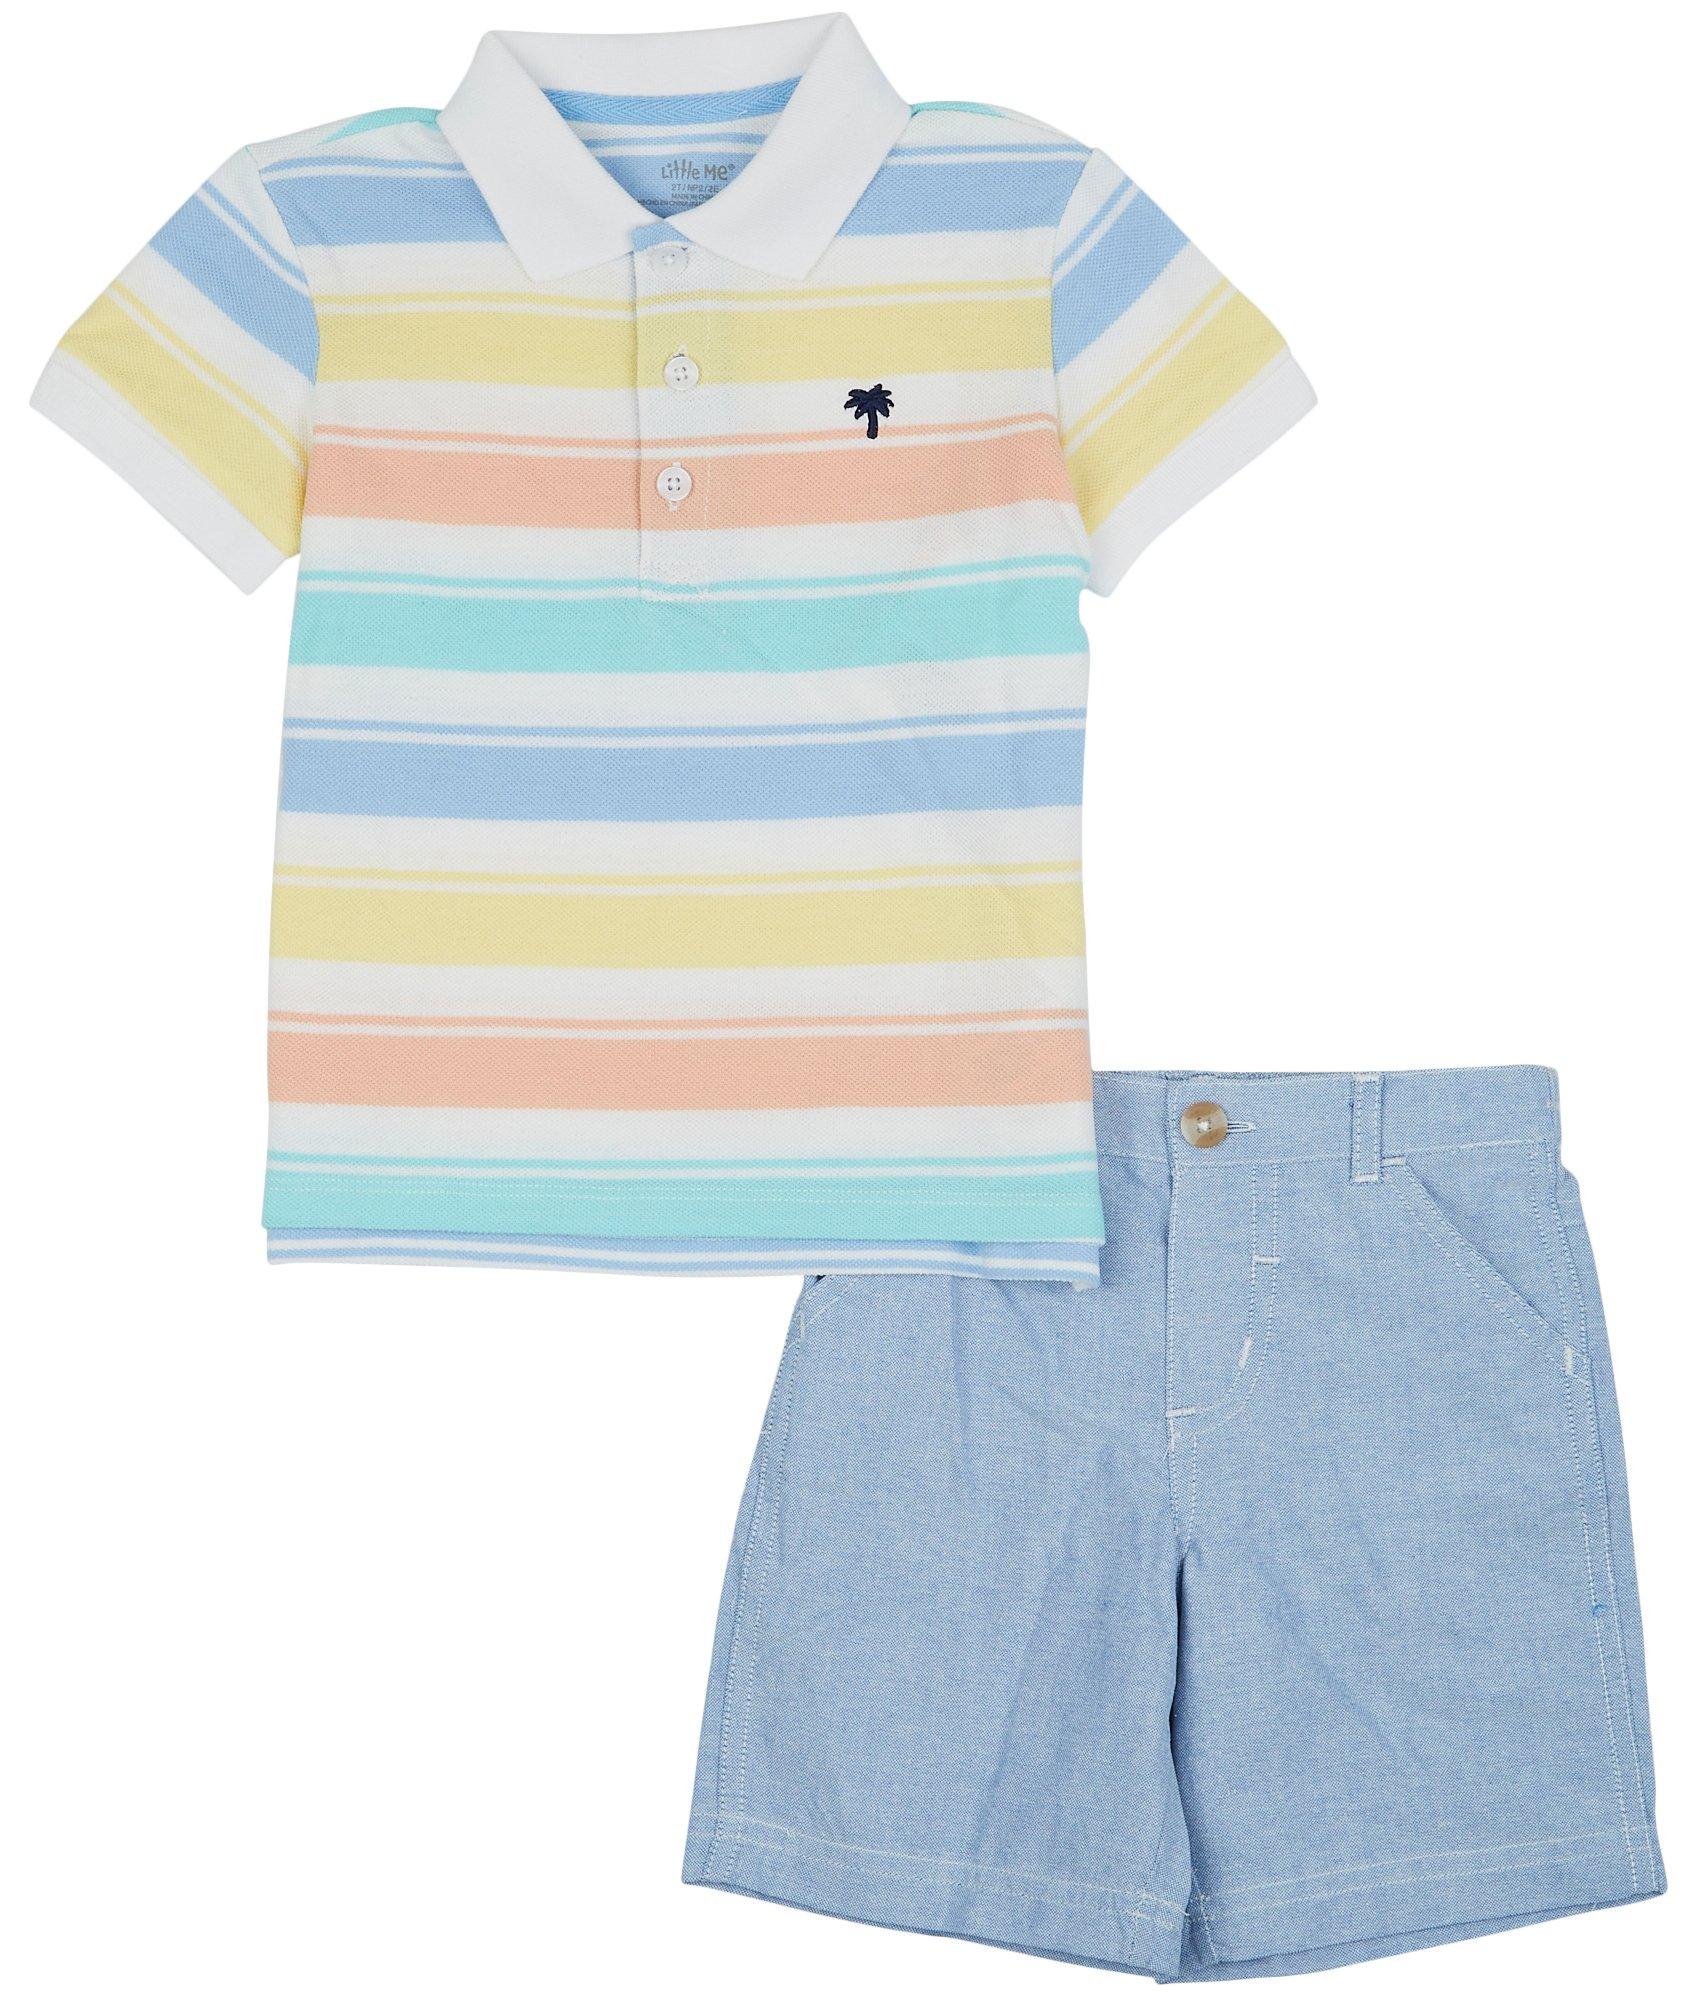 Toddler Boys 2-pc. Golf Stripe Polo Short Set